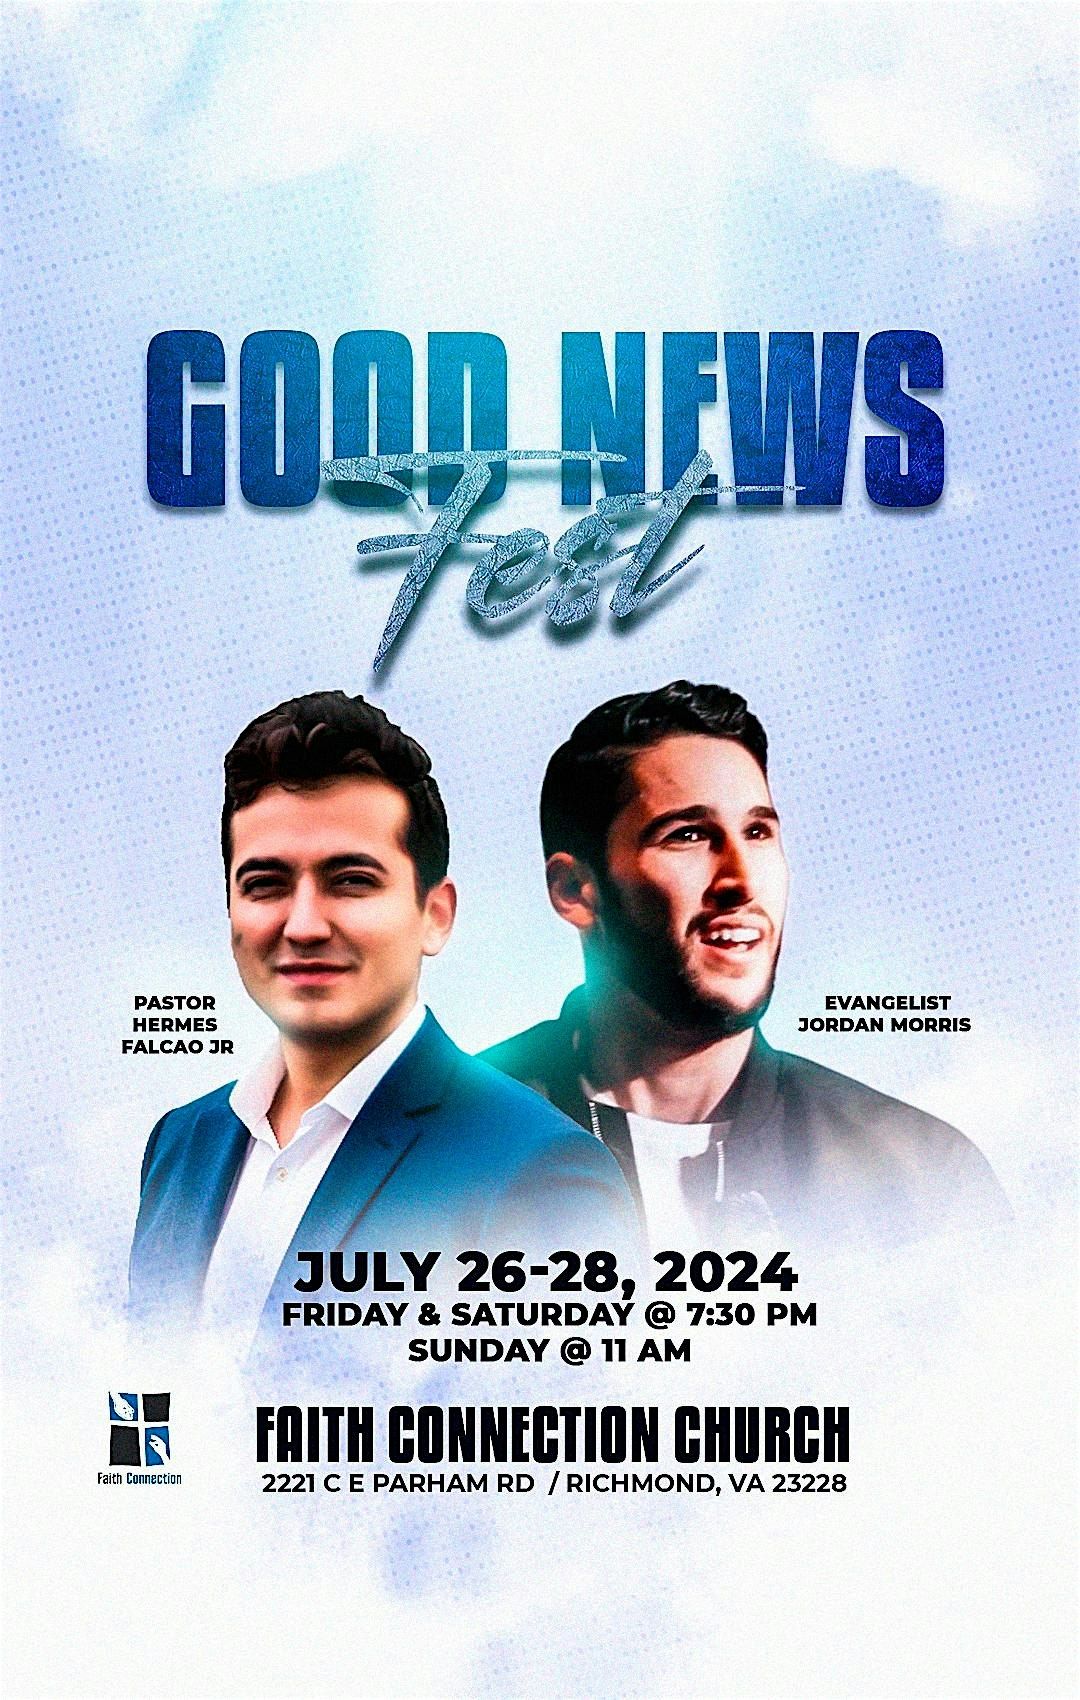 Good News Fest | July 26-28 in Richmond, VA